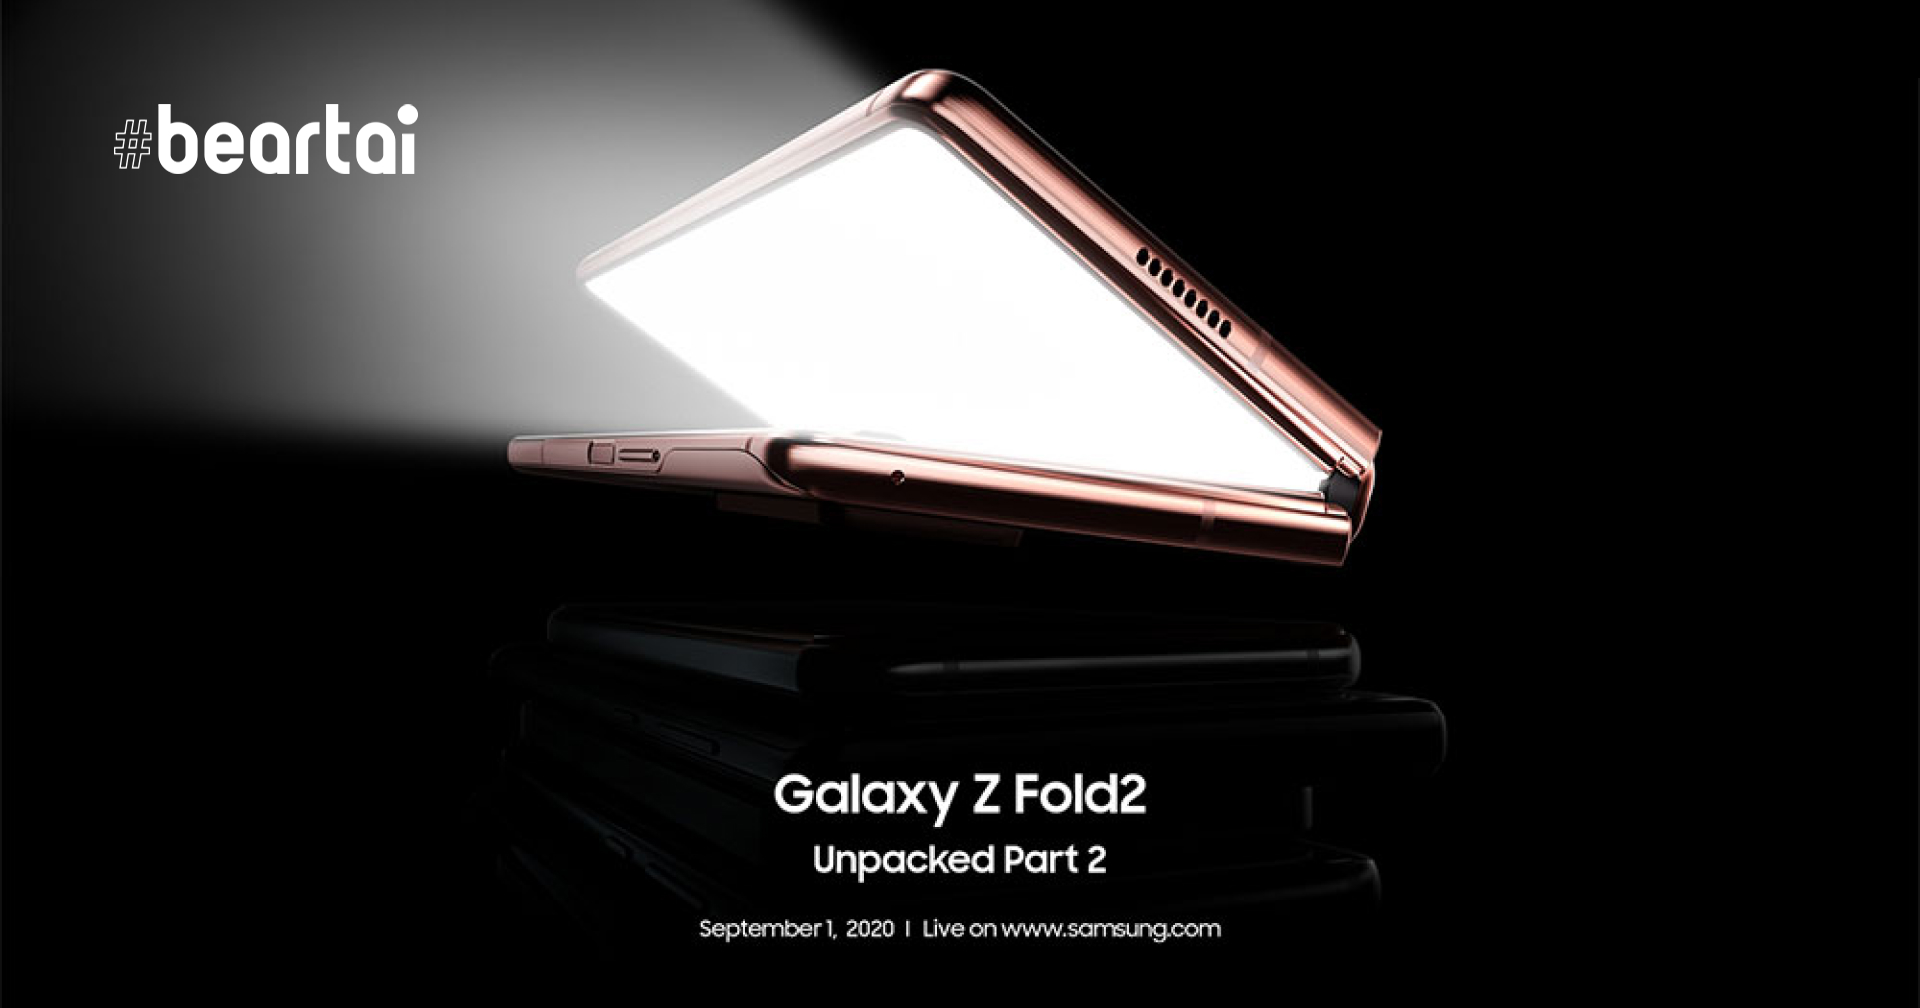 Samsung เตรียมจัด Unpacked Part 2 เปิดตัว Galaxy Z Fold 2 อย่างเป็นทางการ 1 กันยายนนี้